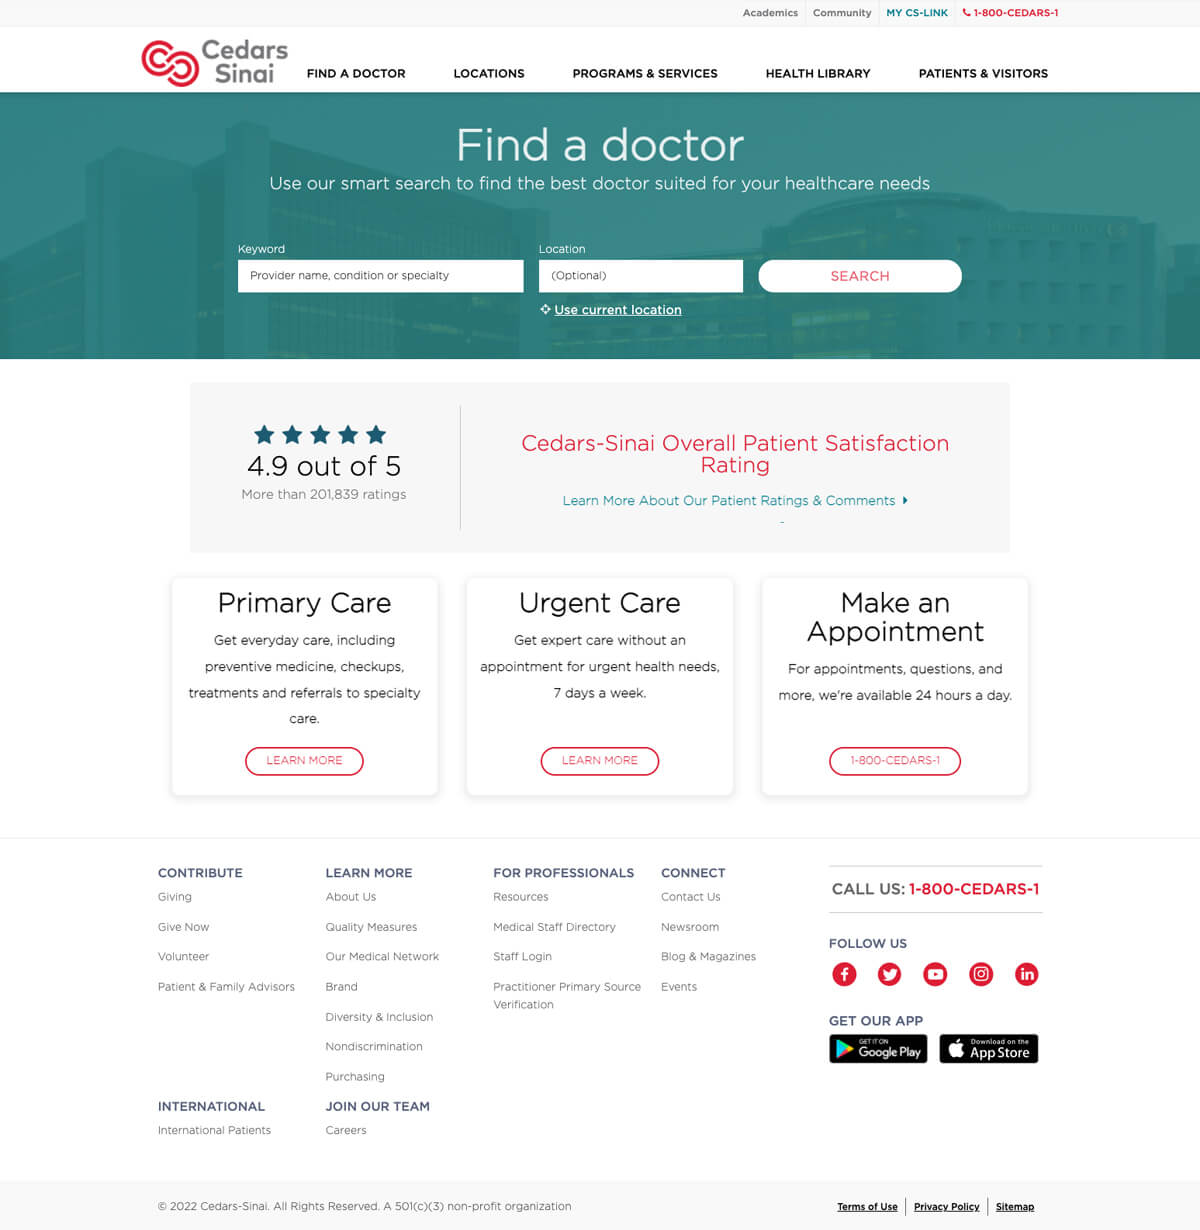 Cedars Sinai's good hospital website